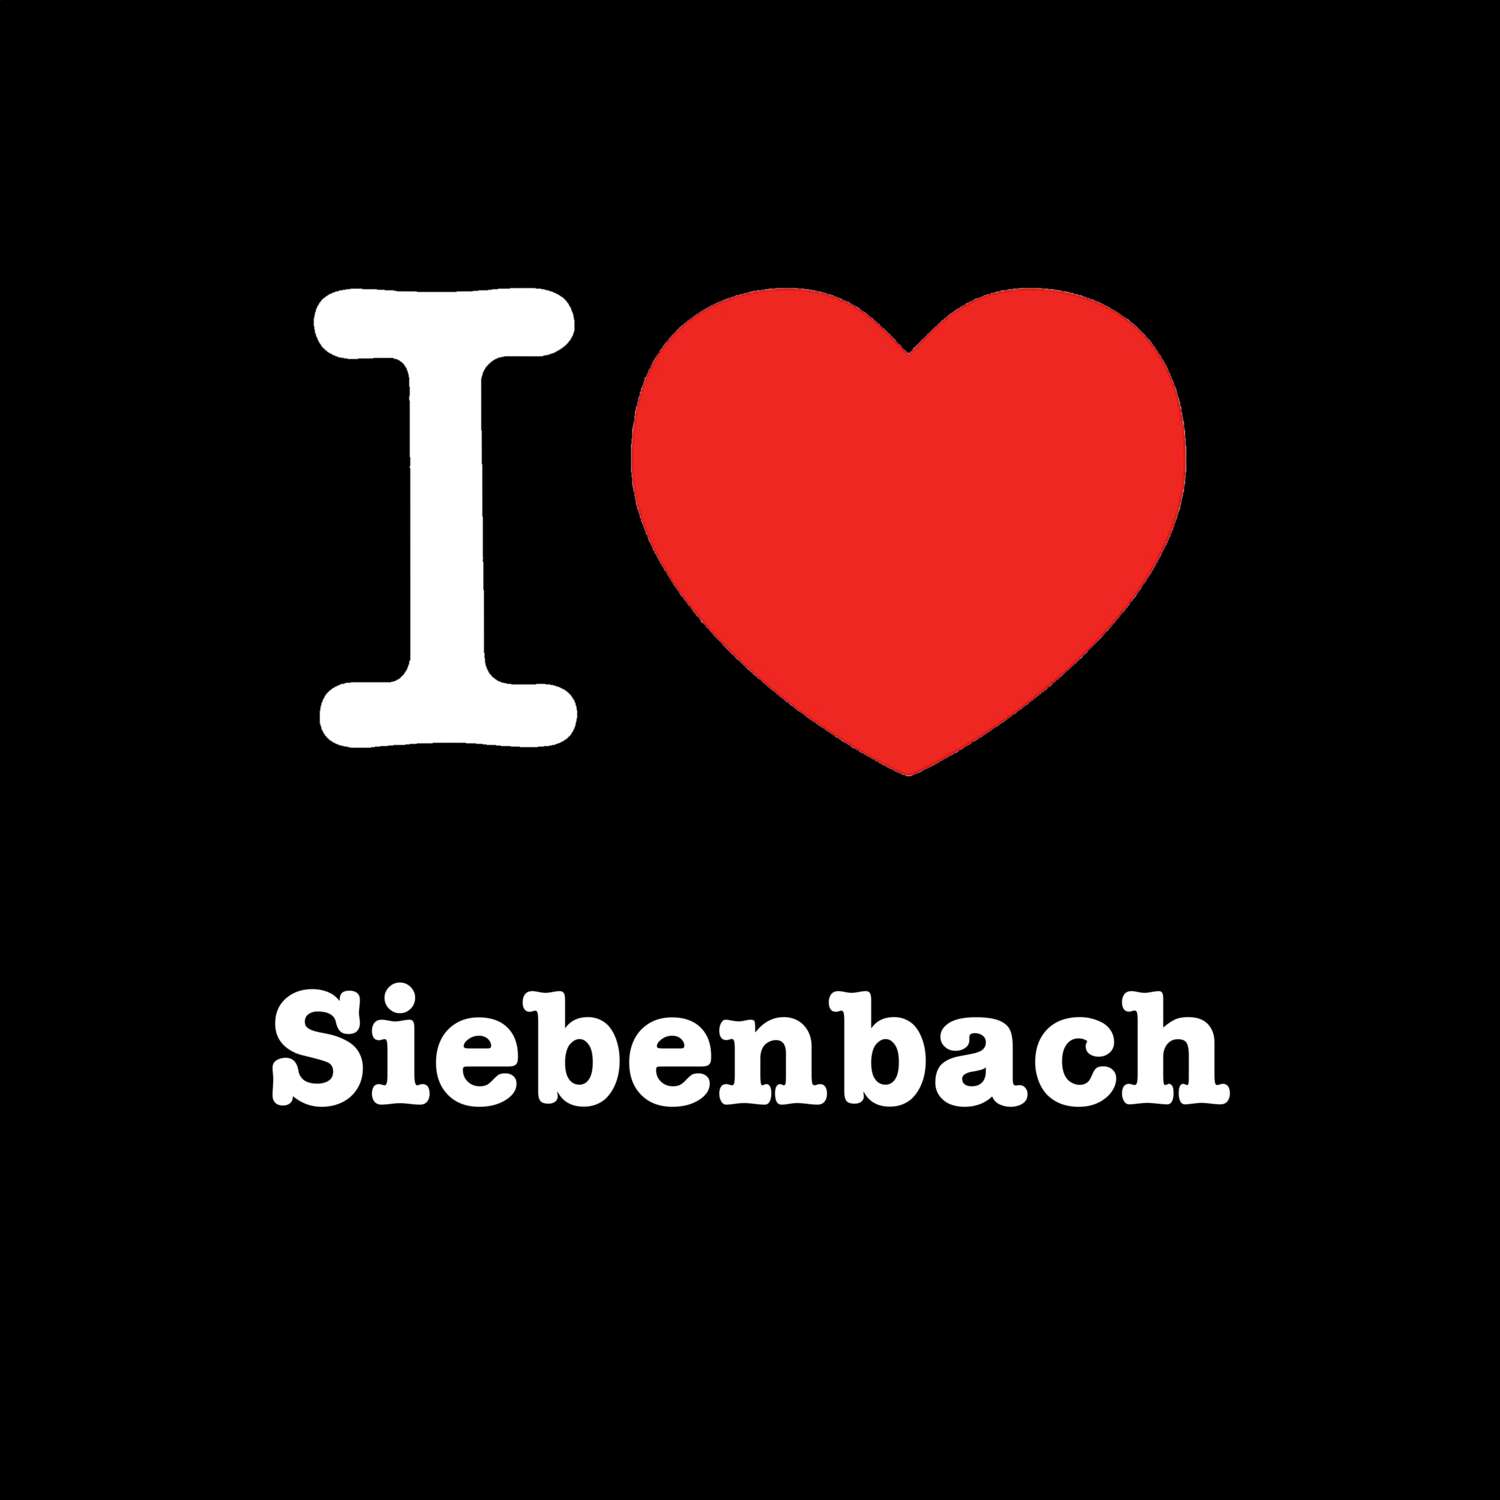 Siebenbach T-Shirt »I love«